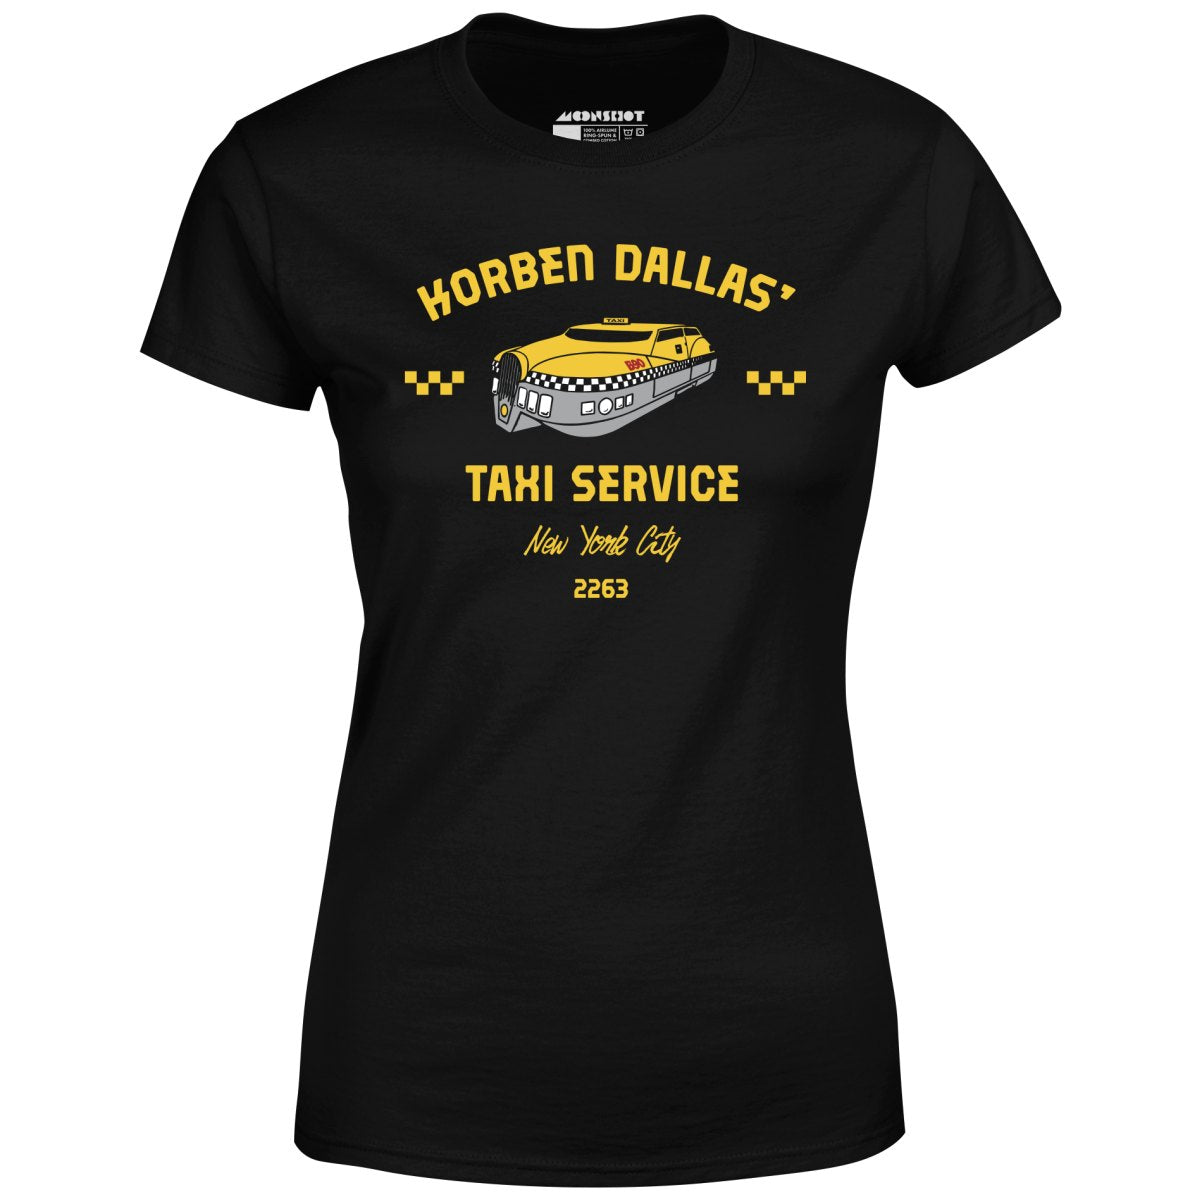 Korben Dallas Taxi Service - Fifth Element - Women's T-Shirt